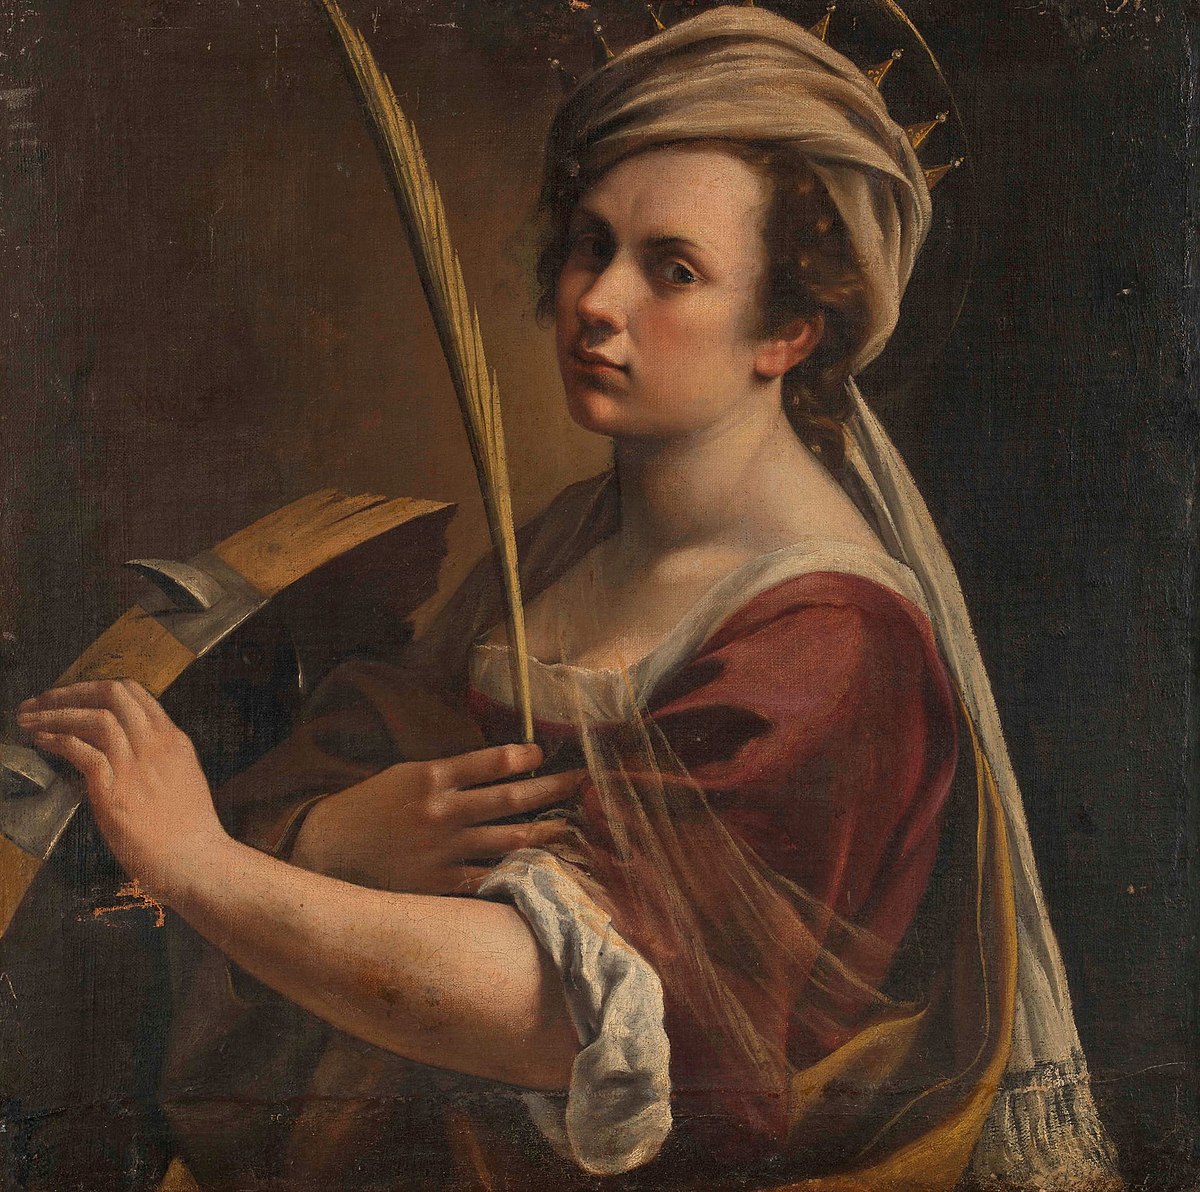 Artemisia+Gentileschi-1593-1652 (49).jpg